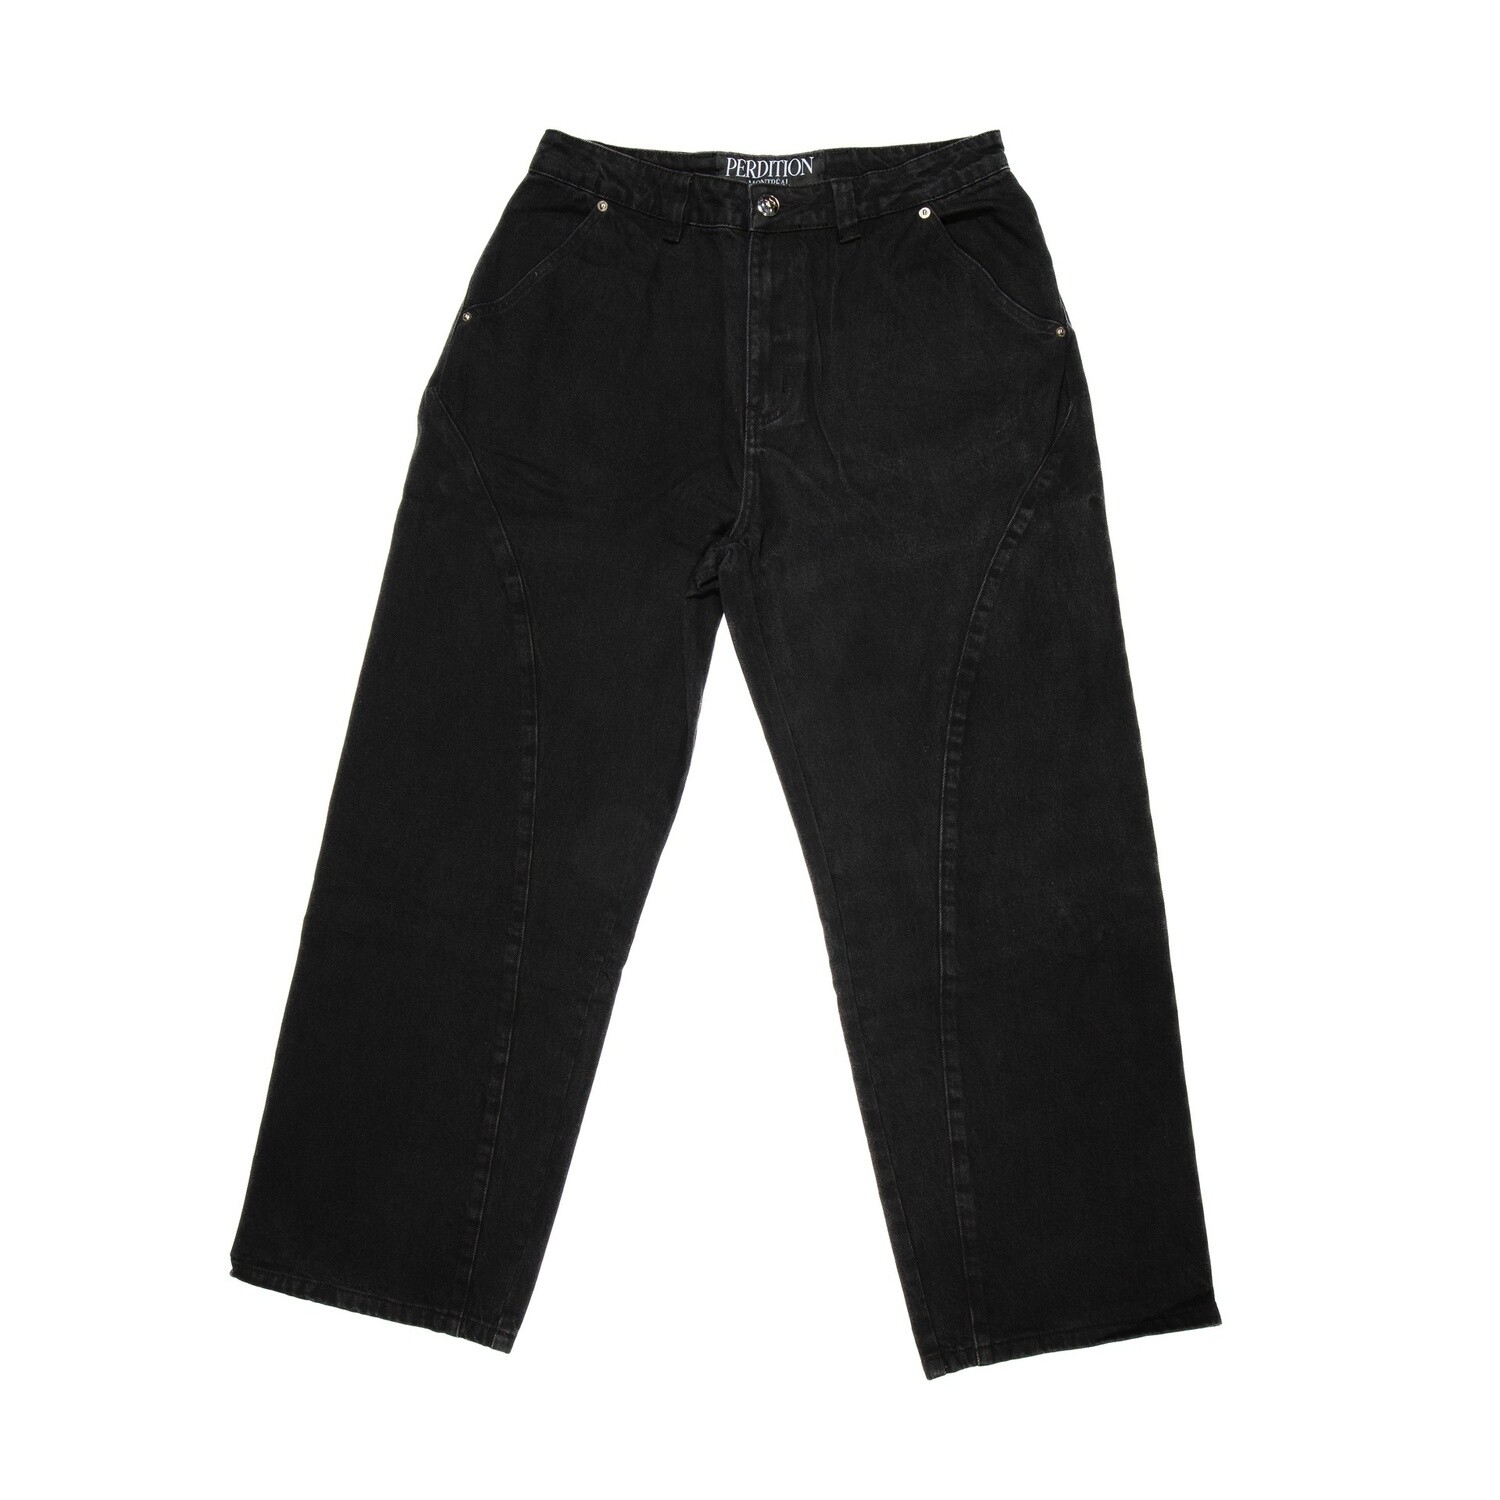 Black Baggy Jeans Perdition, Colour: Black, Size: X-Small